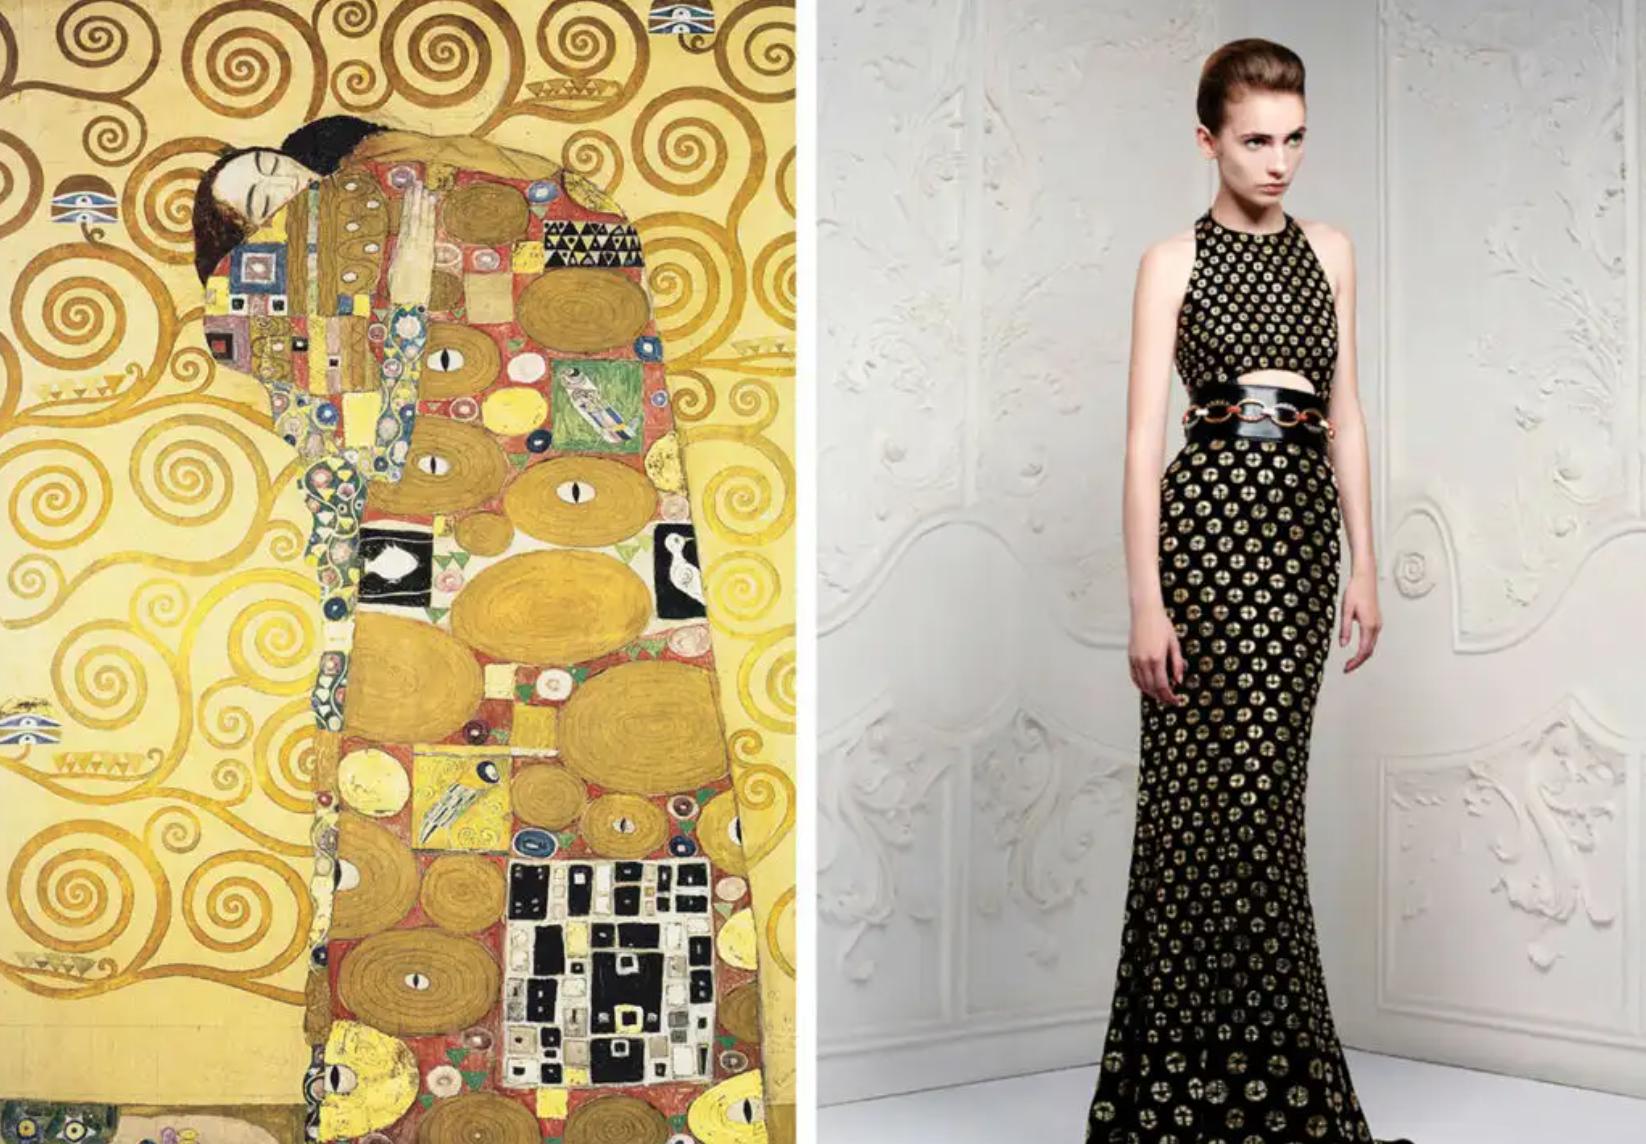 Designer Clothes Inspiration based on Fulfillment by Gustav Klimt